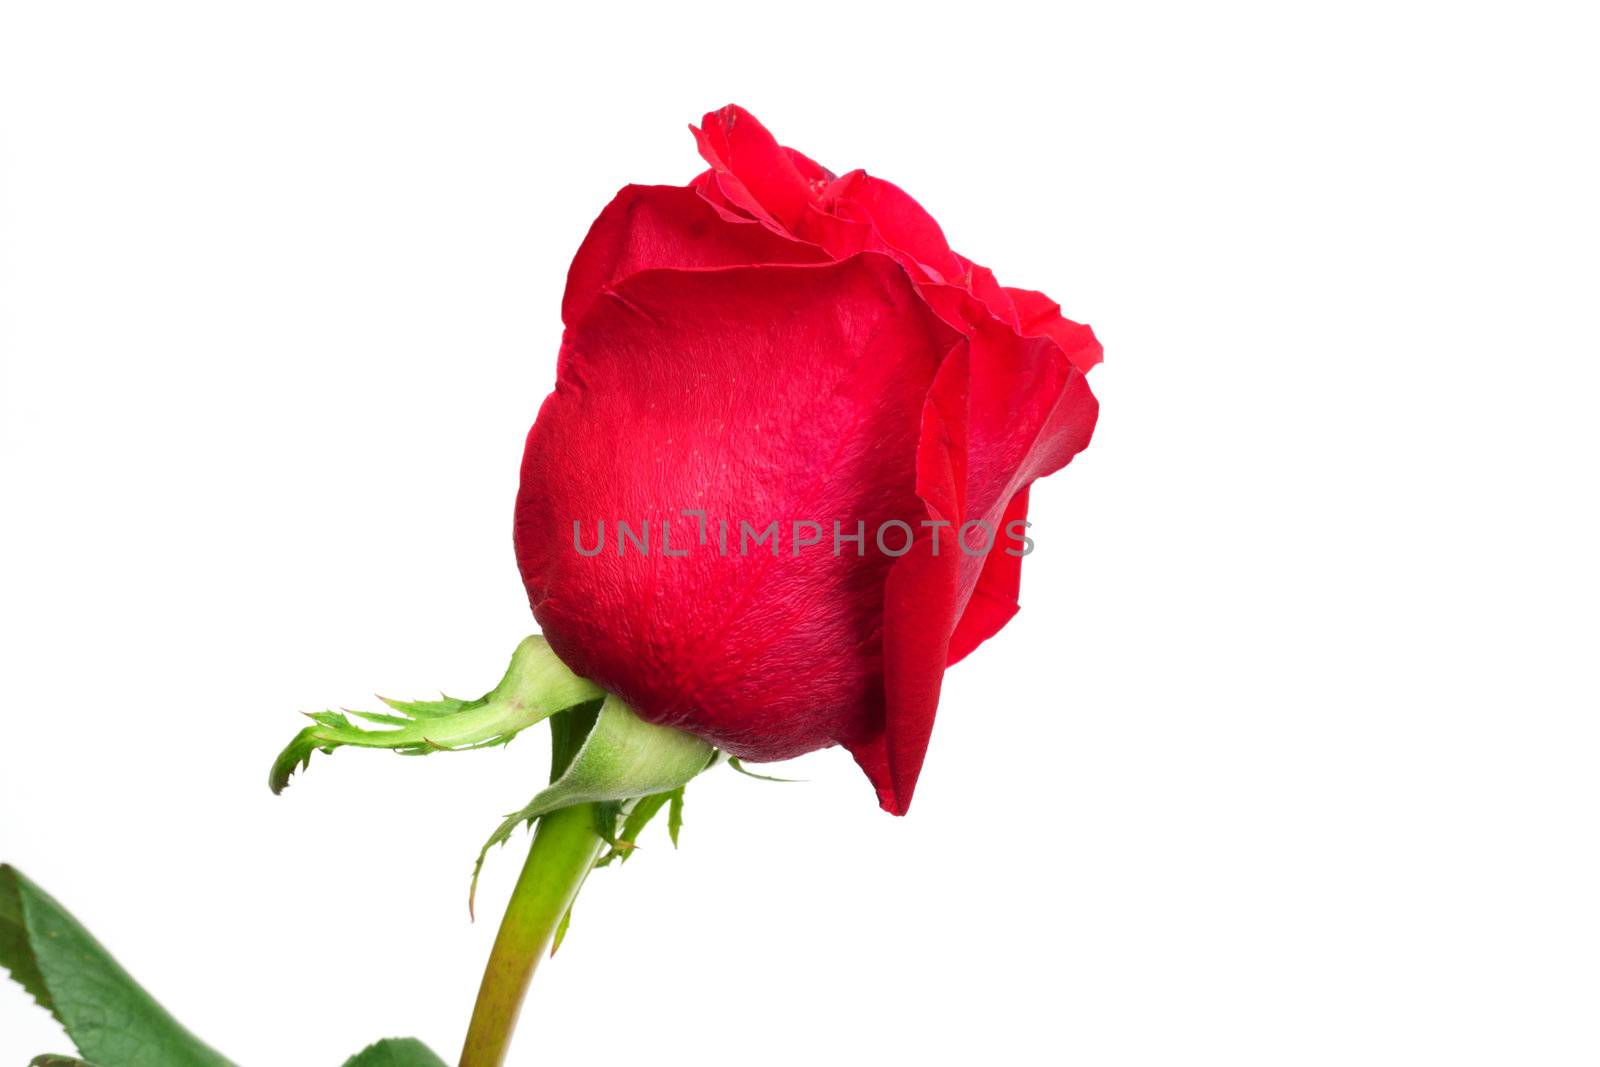 Red rose on white background  by schankz